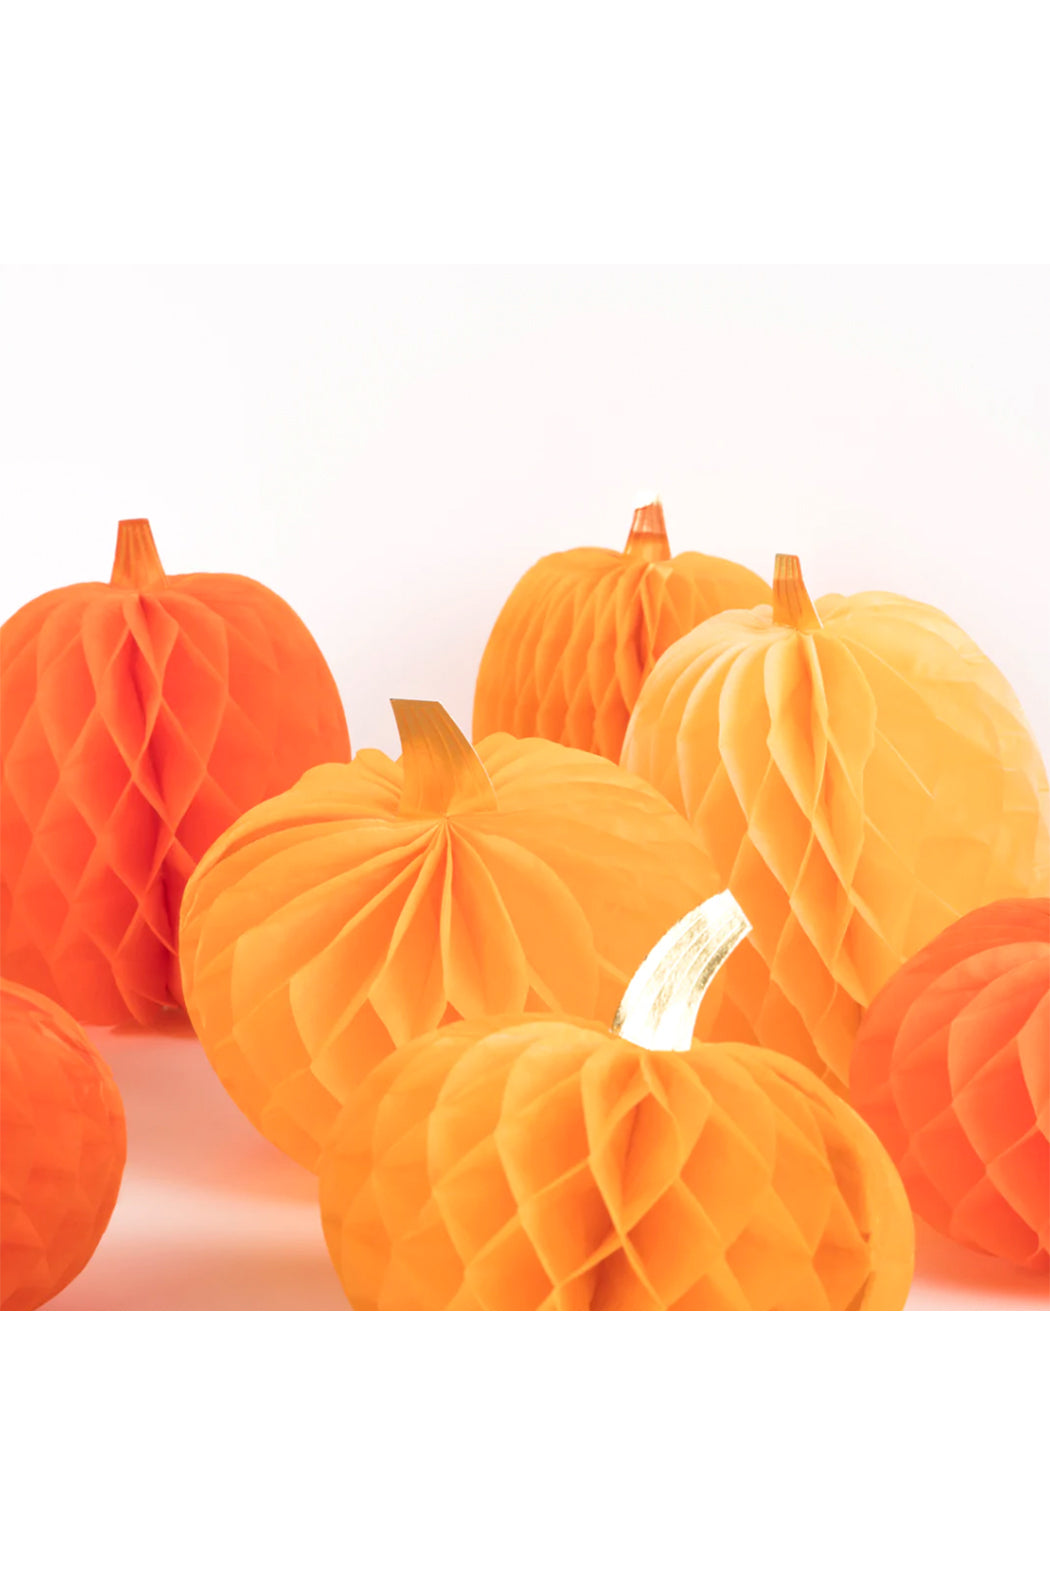 Meri Meri Honeycomb Pumpkins - Set Of 10